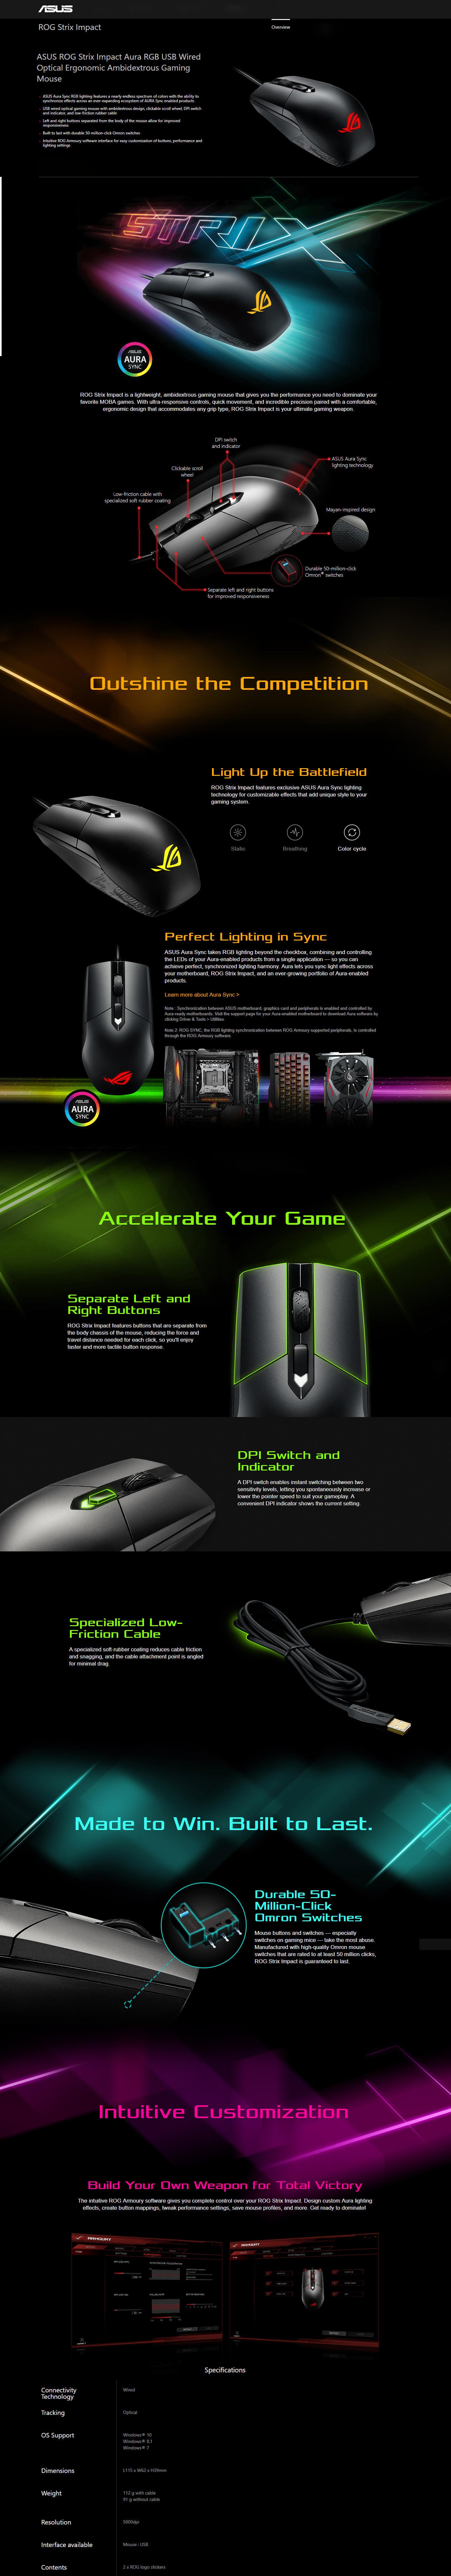  Buy Online Asus ROG Strix Impact Aura RGB USB Wired Optical Gaming Mouse (P303-ROGSTRIXIMPAC)